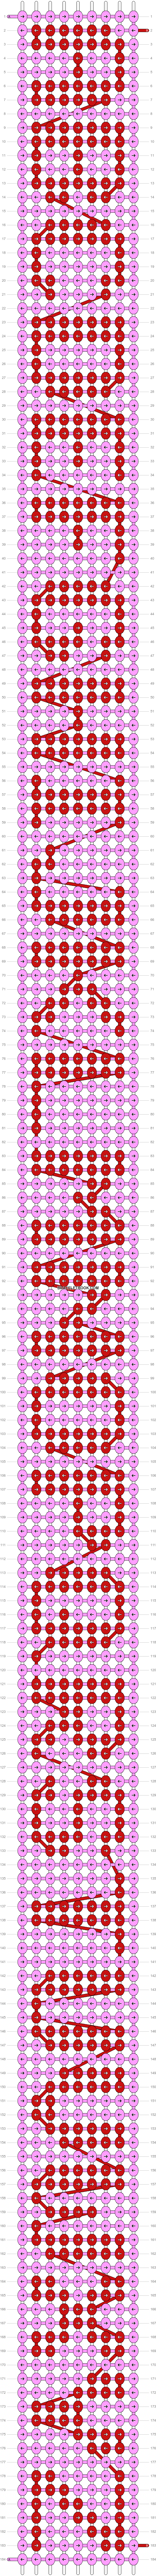 Alpha pattern #48601 variation #147559 pattern